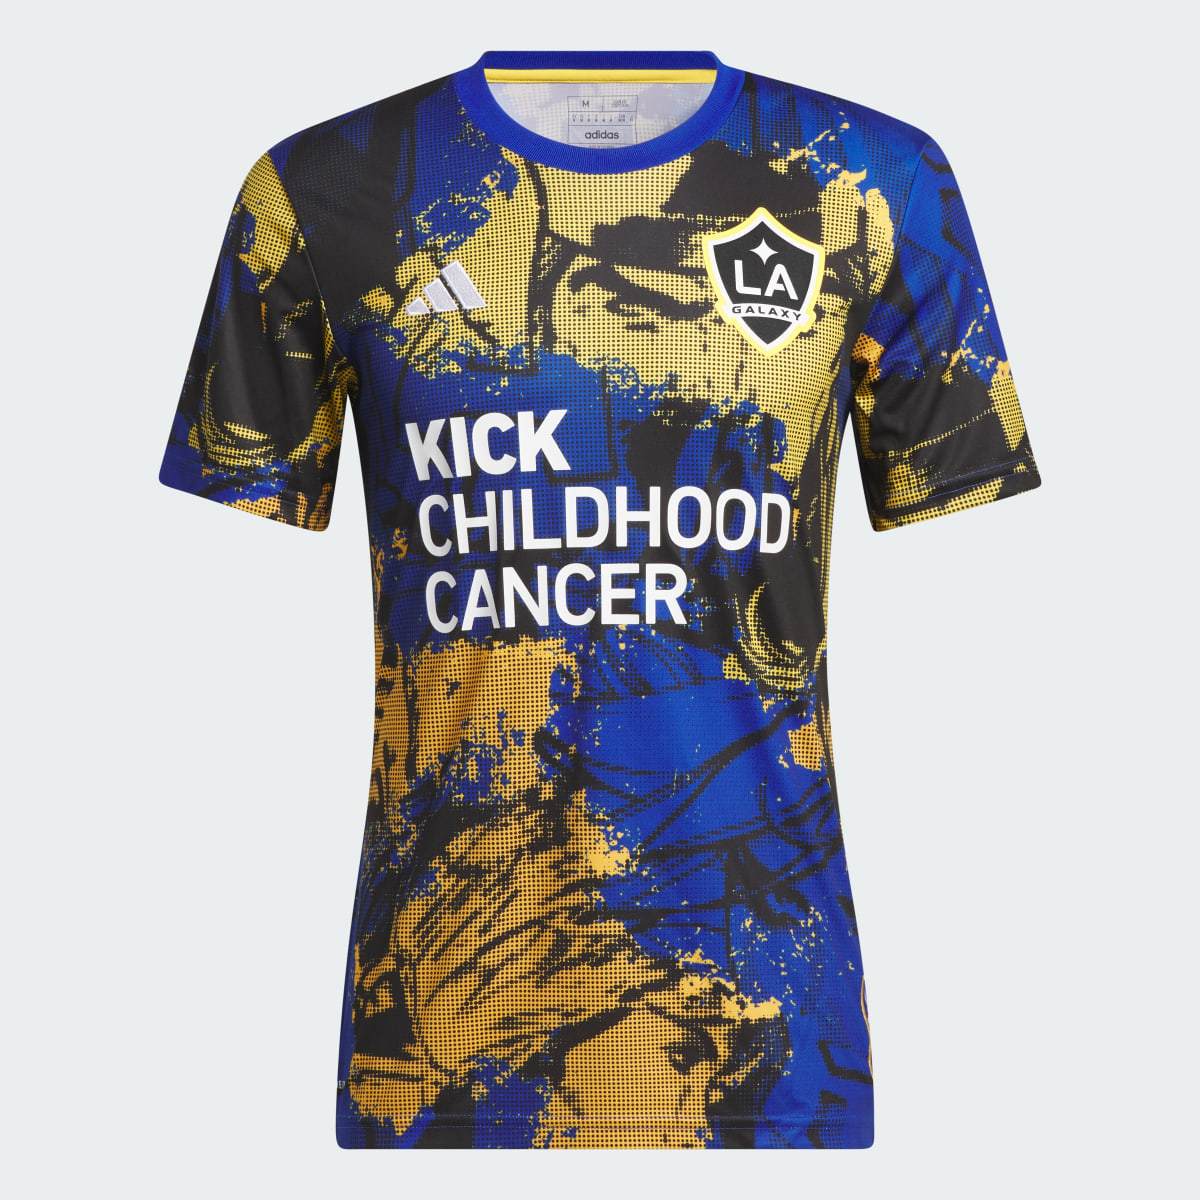 Adidas Los Angeles Galaxy Marvel MLS Kick Childhood Cancer Pre-Match Jersey. 5